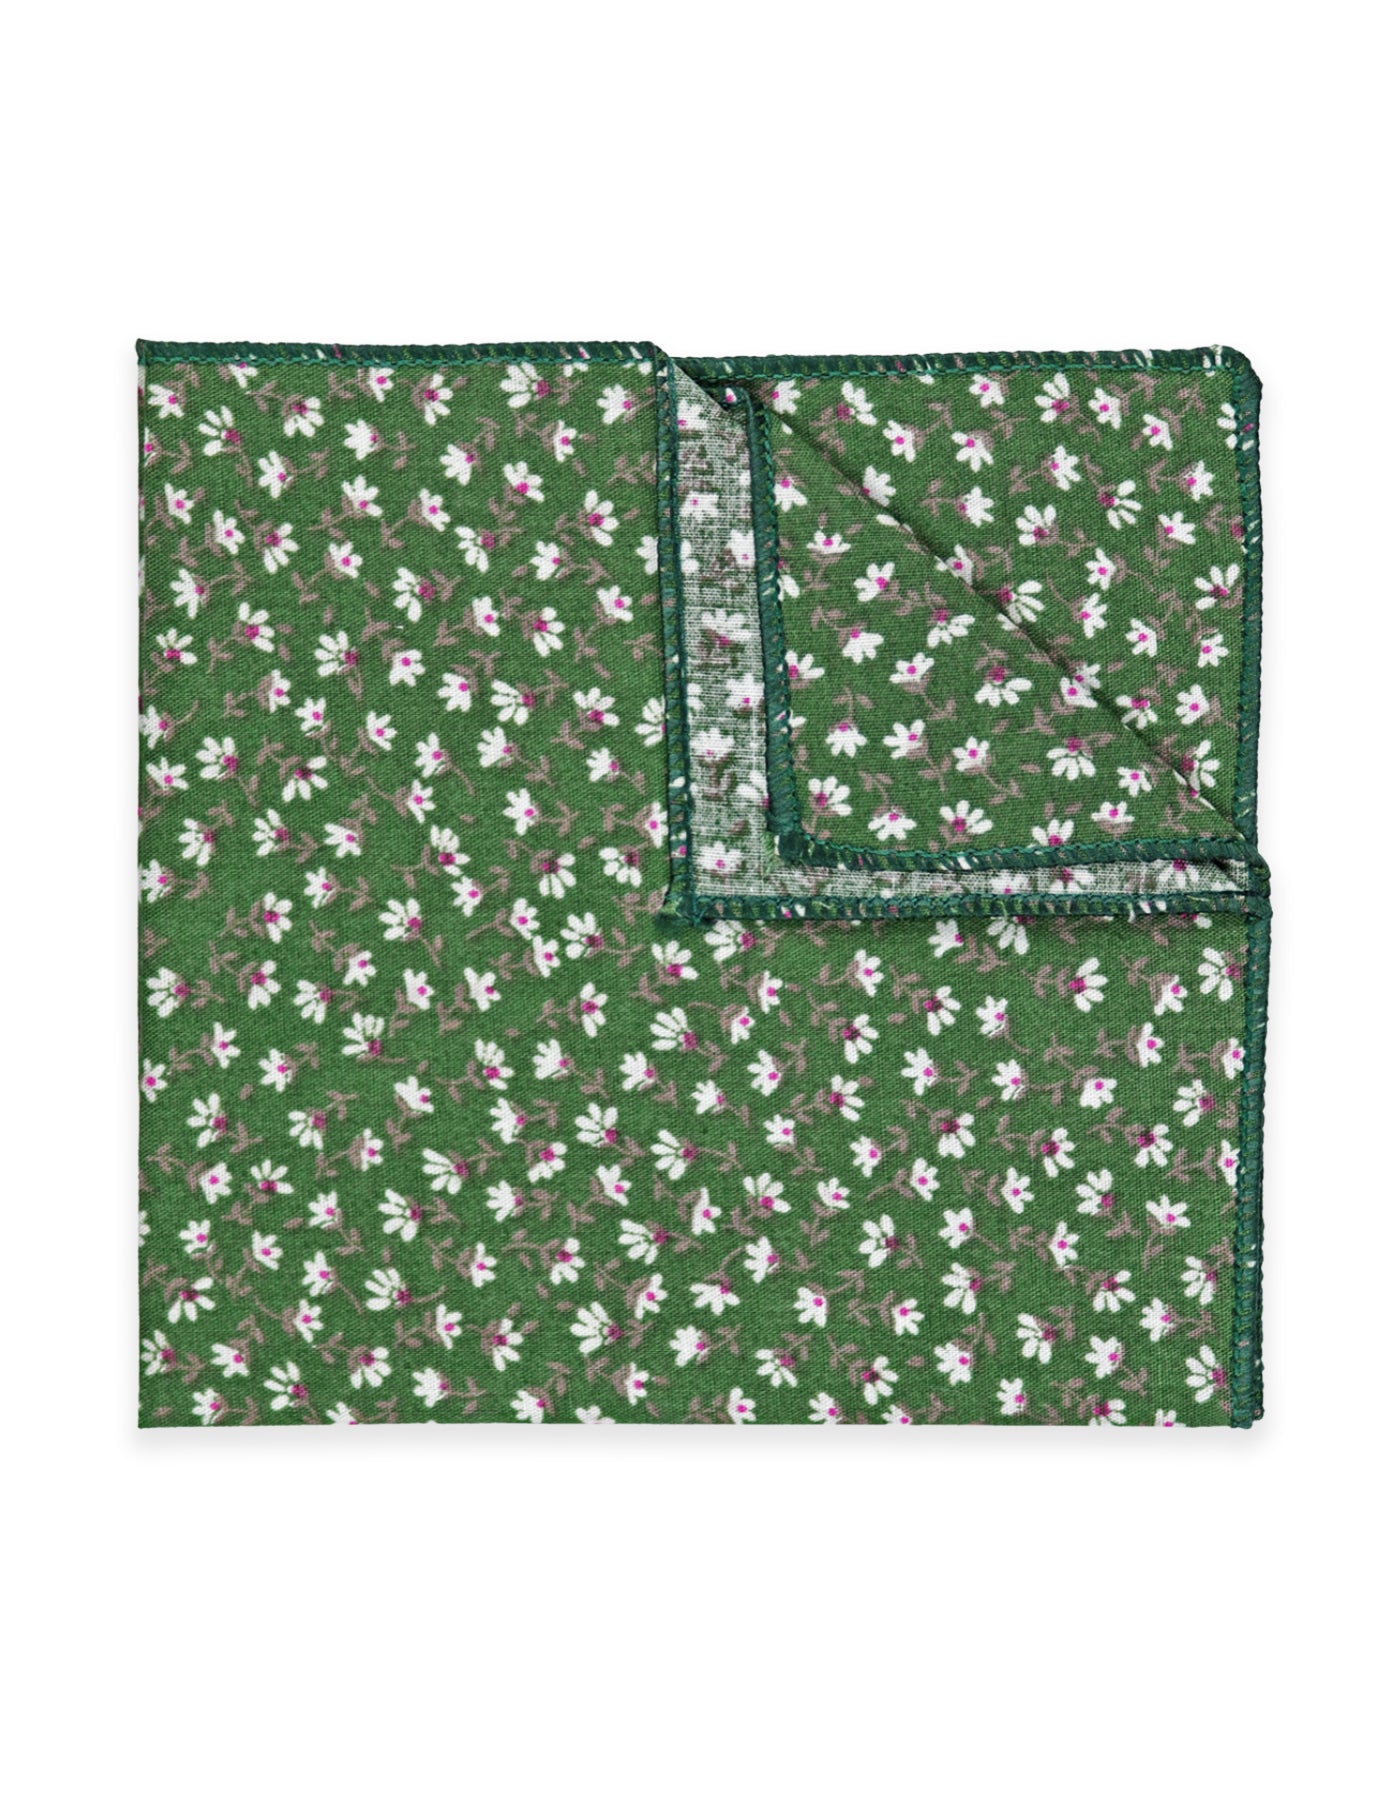 100% Cotton Floral Print Pocket Square - Green & White